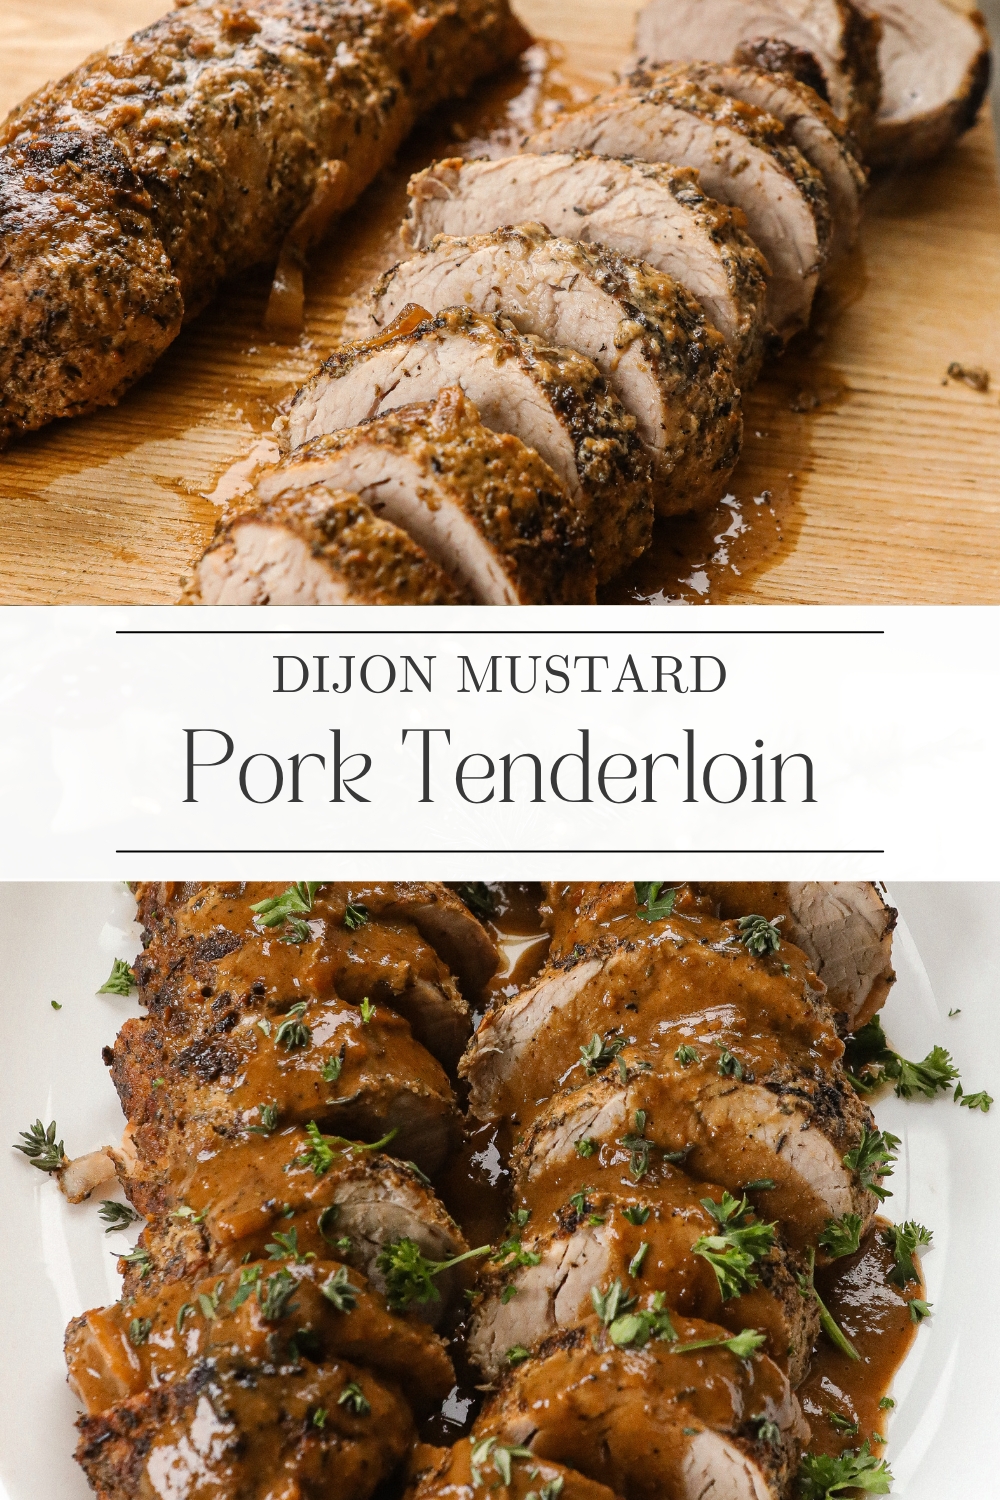 Dijon Mustard Pork Tenderloin recipe